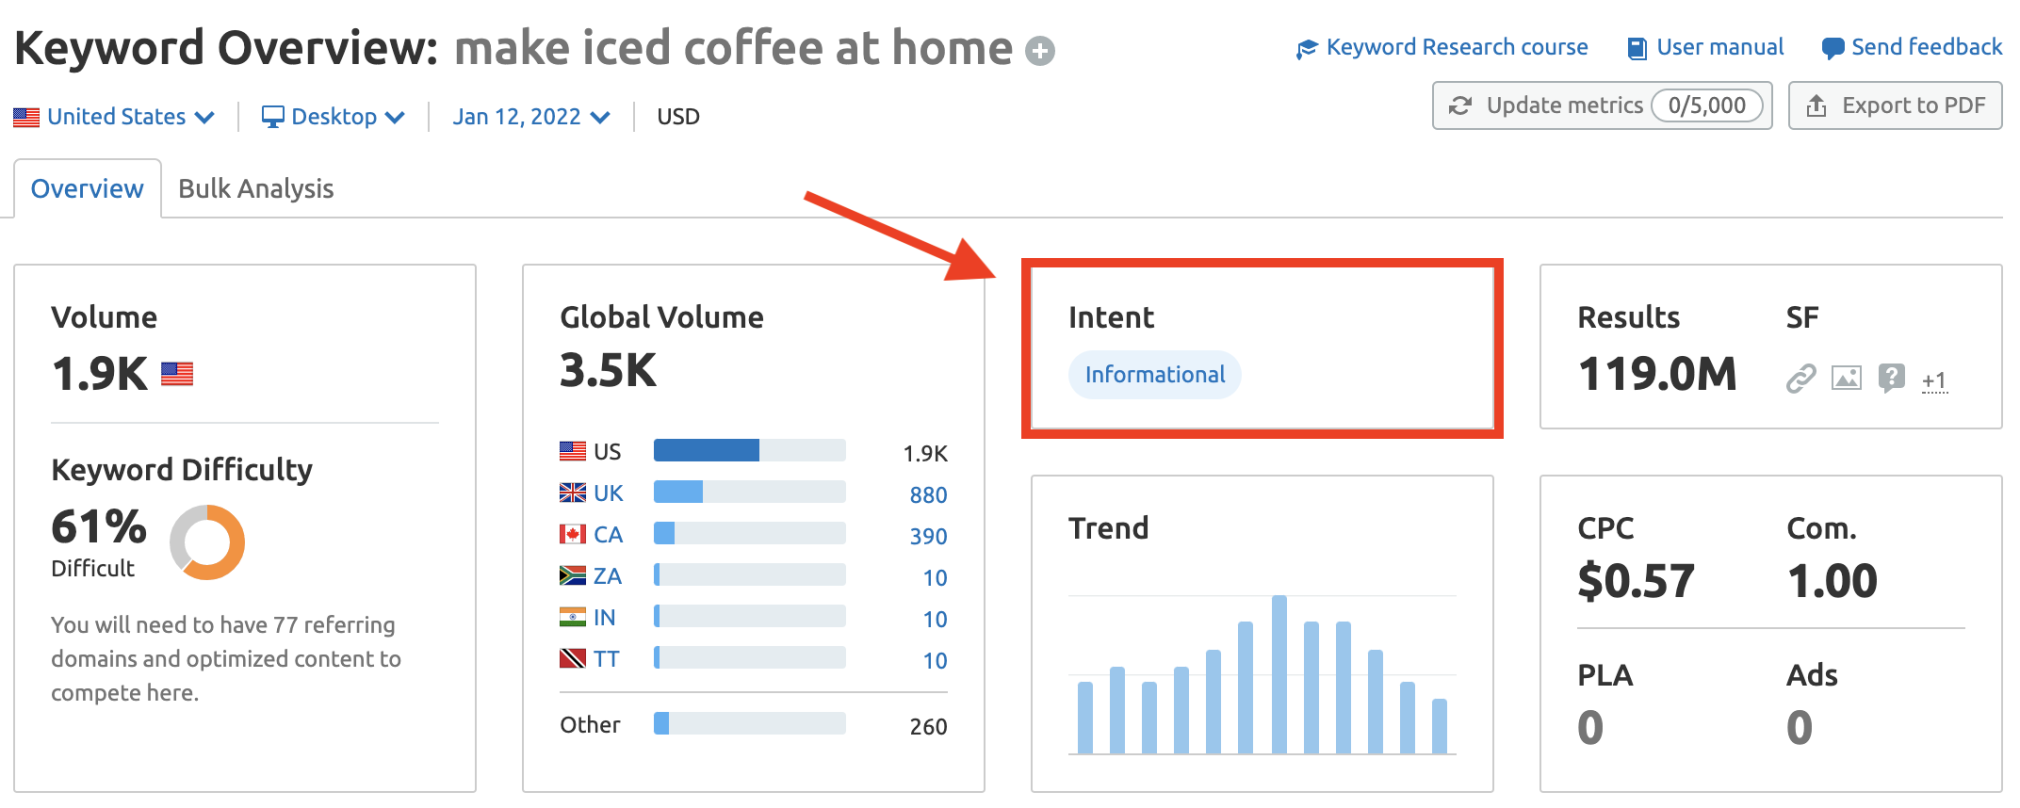 search intent widget in semrush keyword overview tool